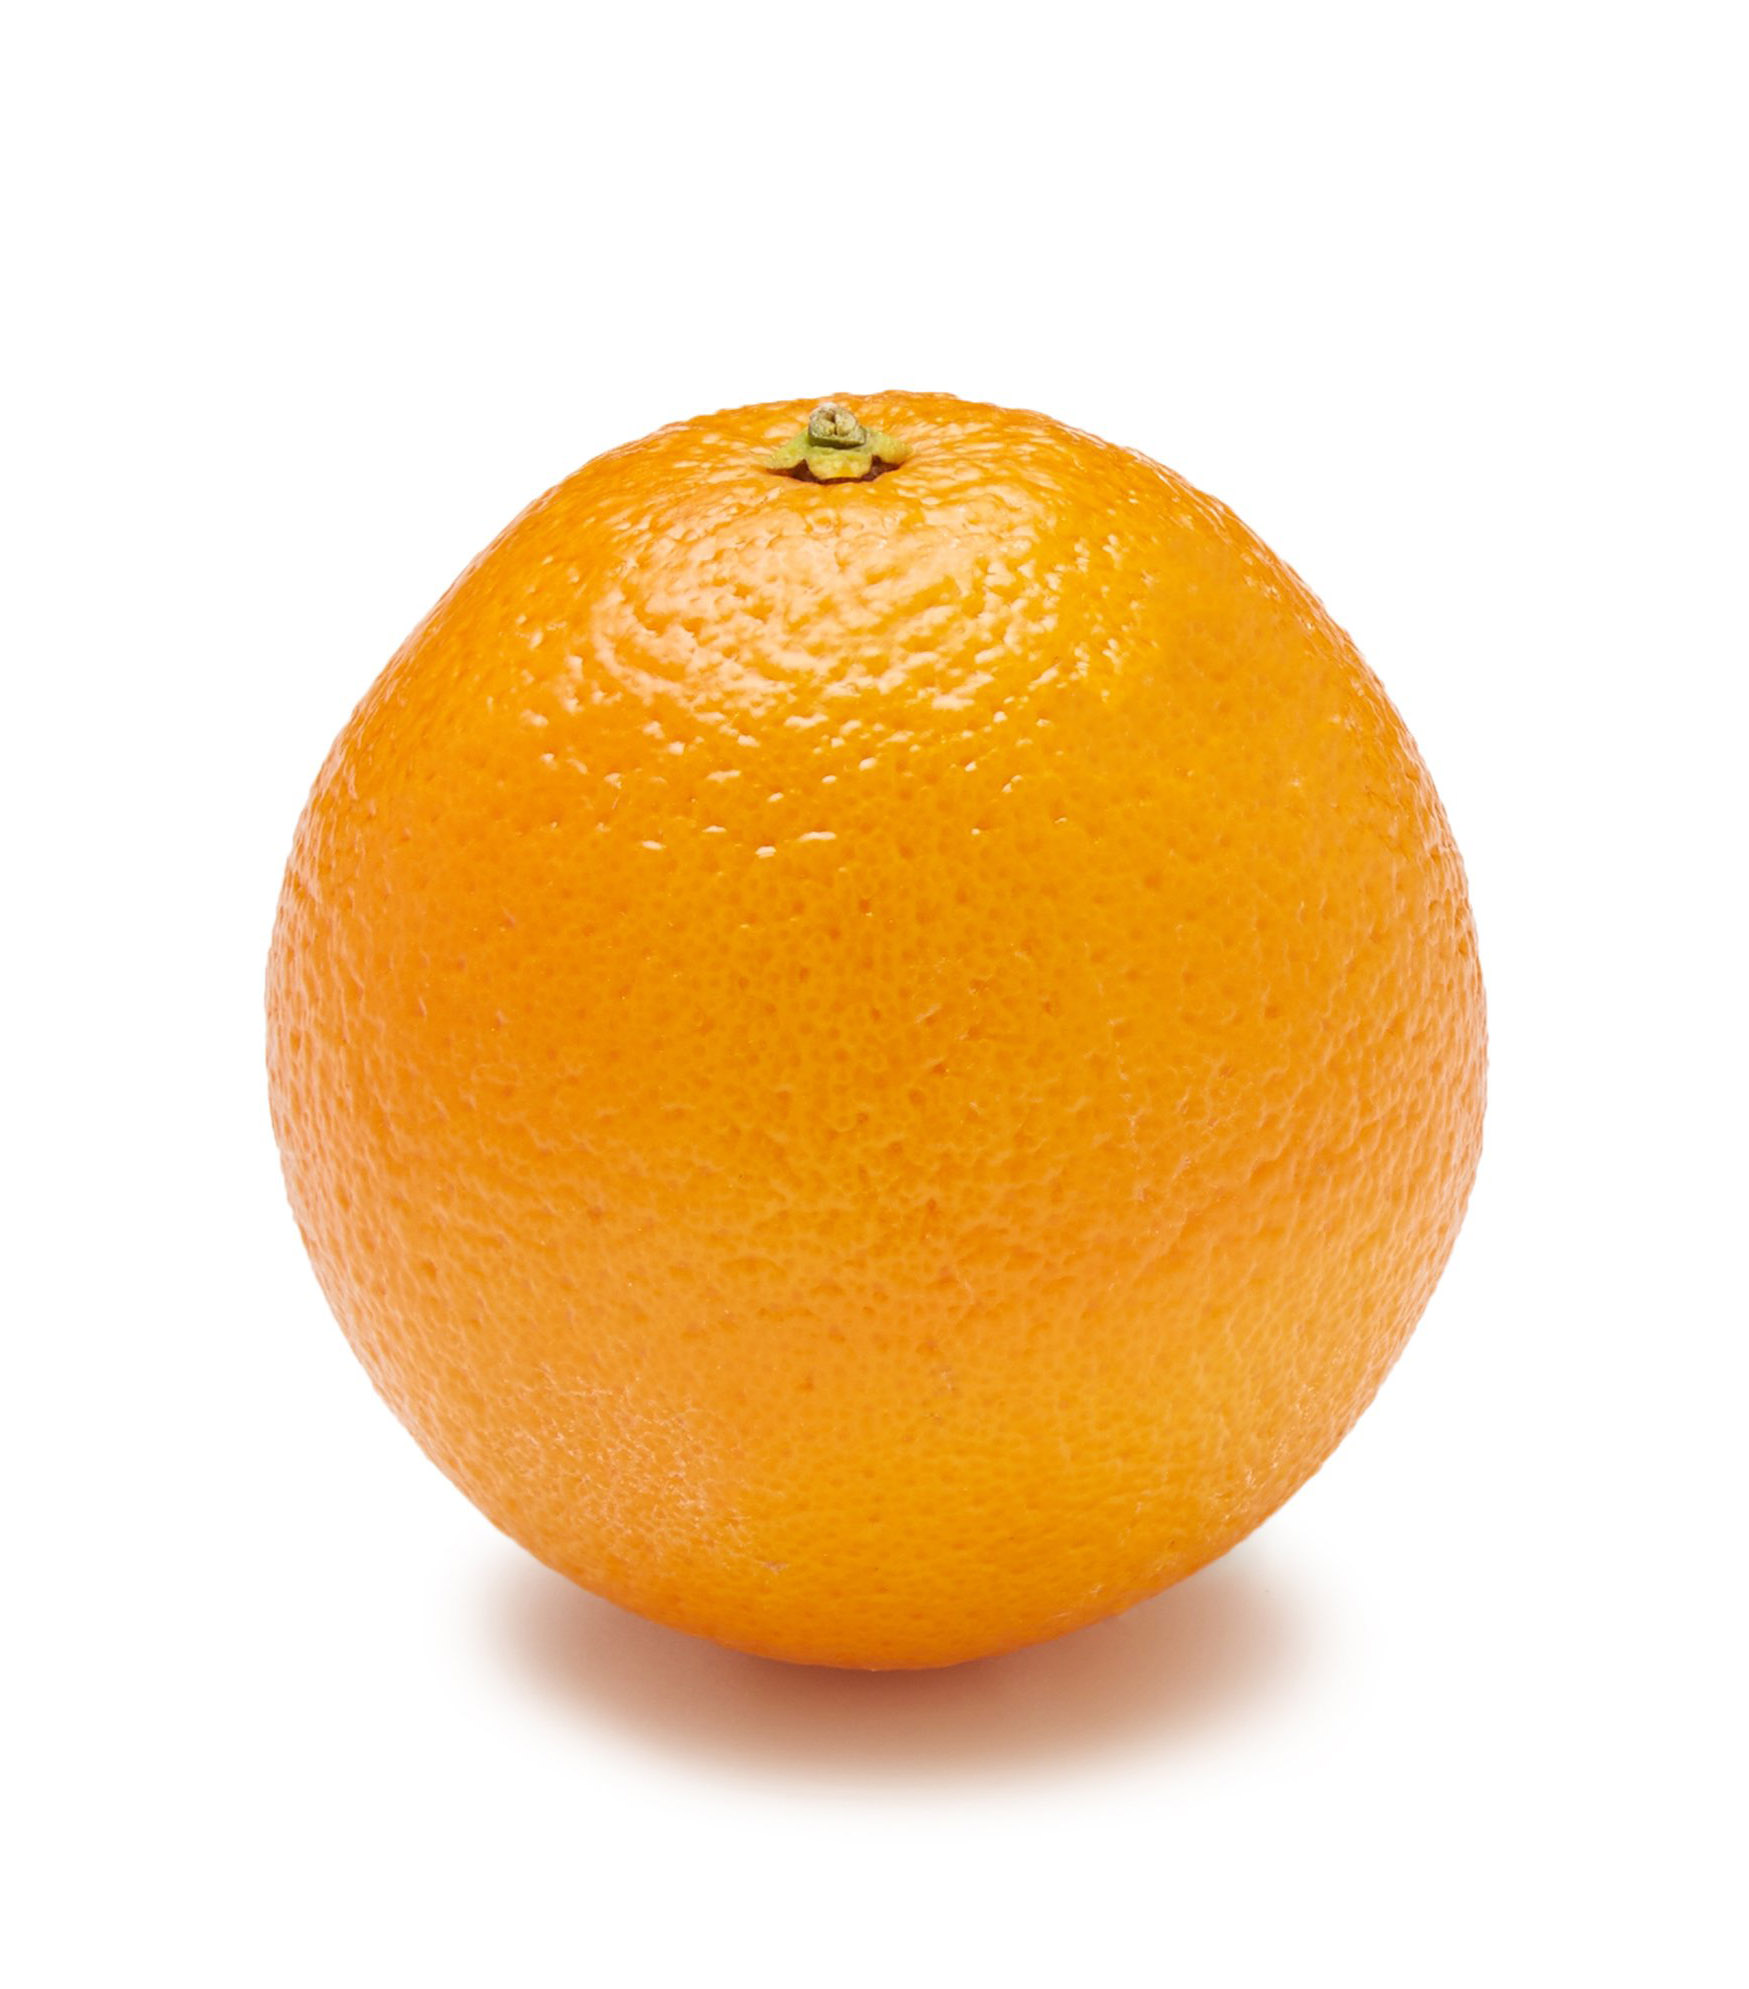 Whole Foods Market + Navel Oranges, 3 lb